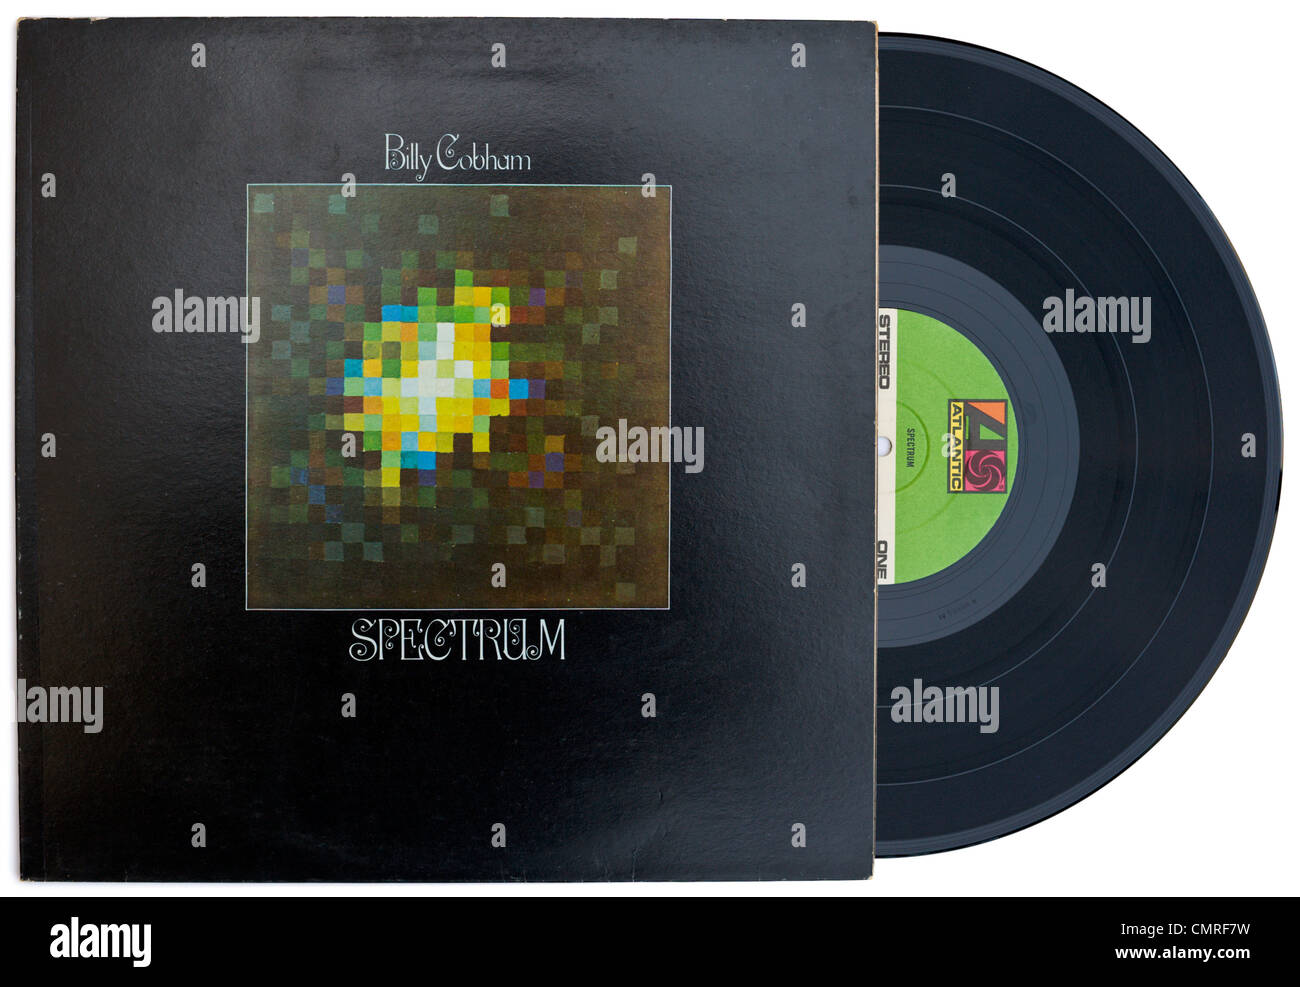 Jazz drummer BILLY COBHAM Spectrum vinyl album cover released 1973 on ATLANTIC RECORDS label Stock Photo